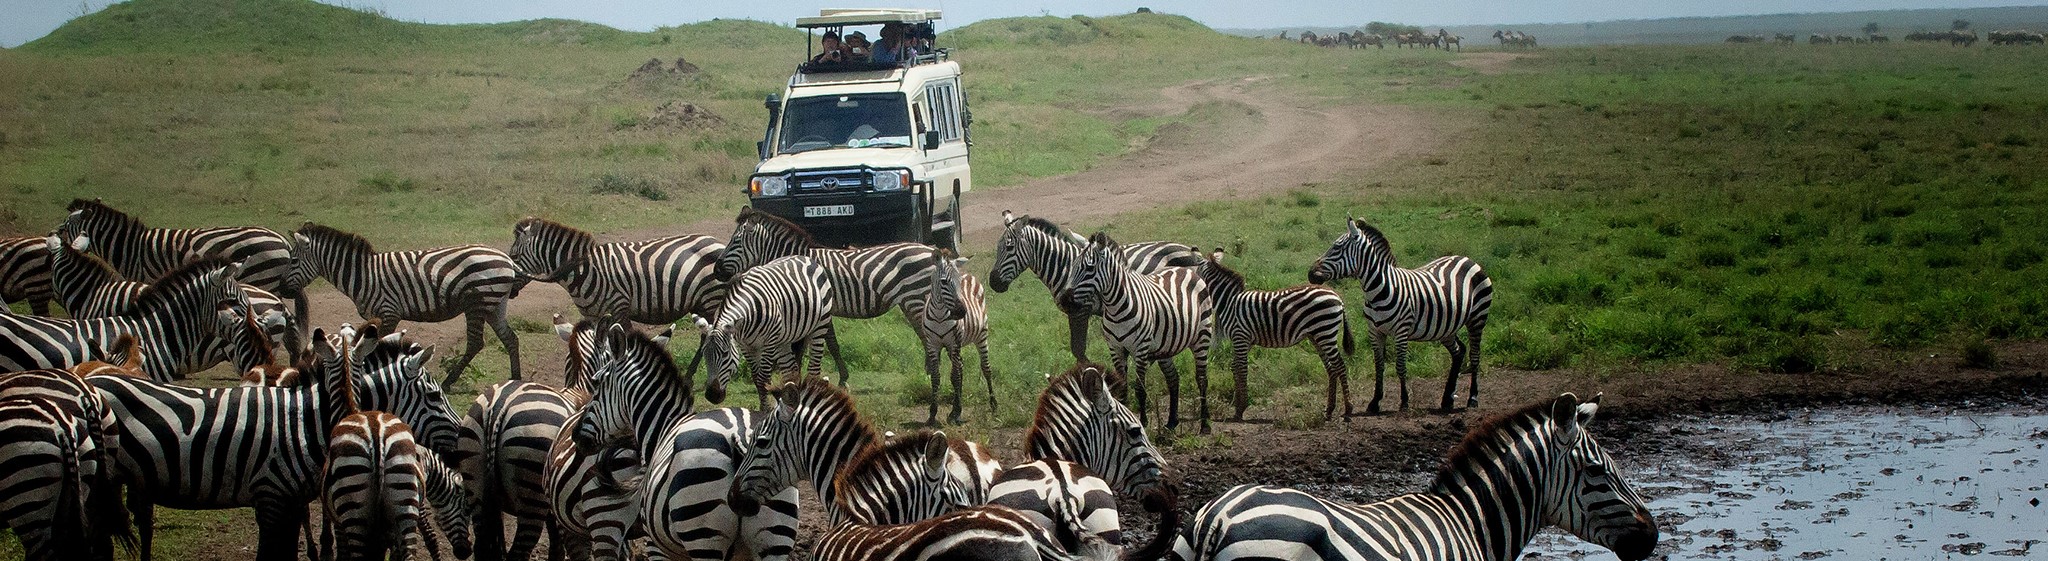 Tanzania Safaris and Beach Vacations - Safanta Tours & Travel Company Limited